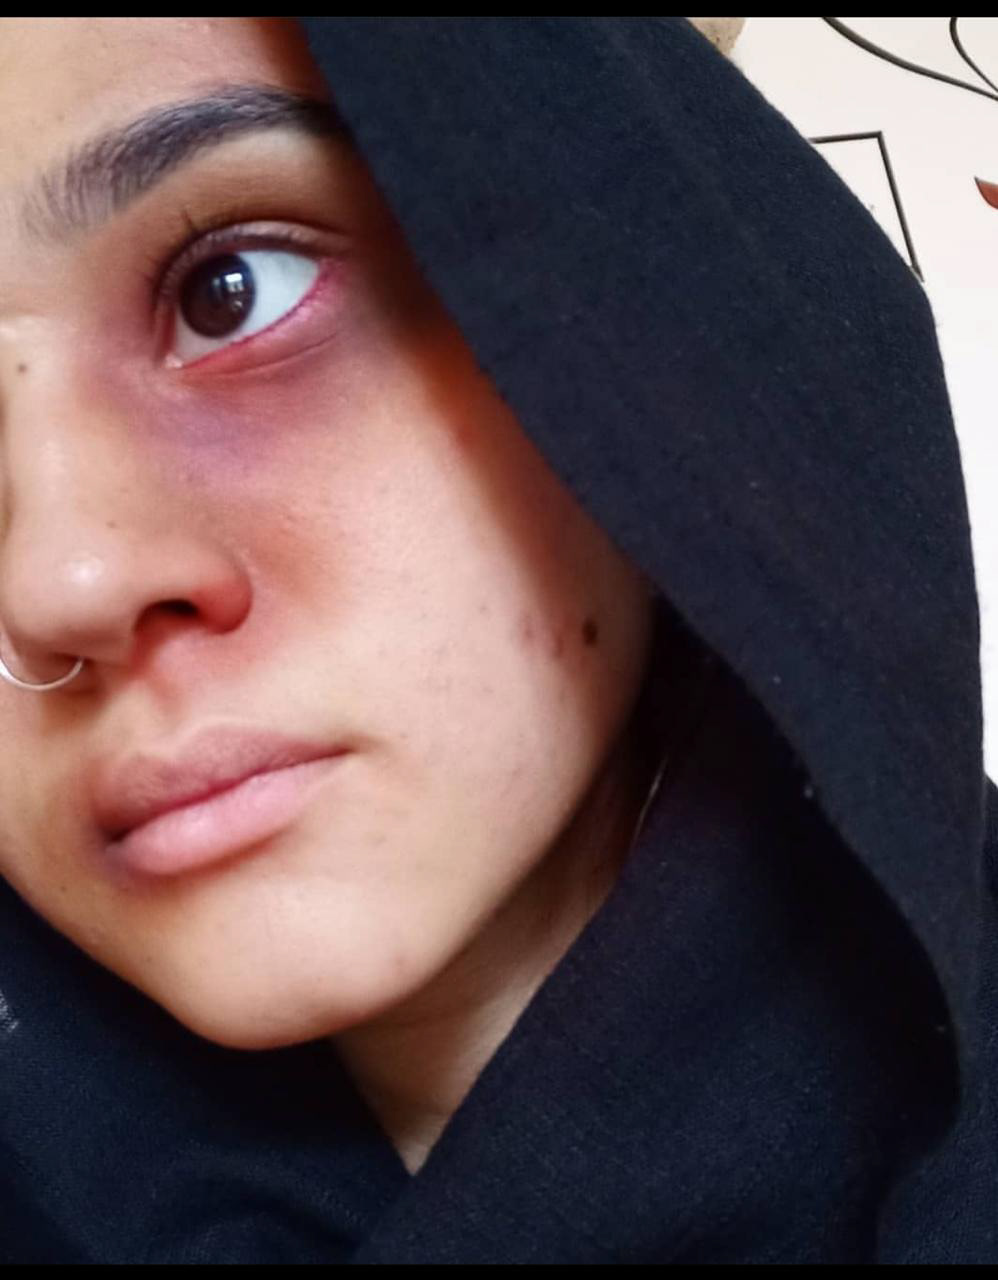 blood Bruise domestic fx makeup injustice Justice makeup pain SFX violence